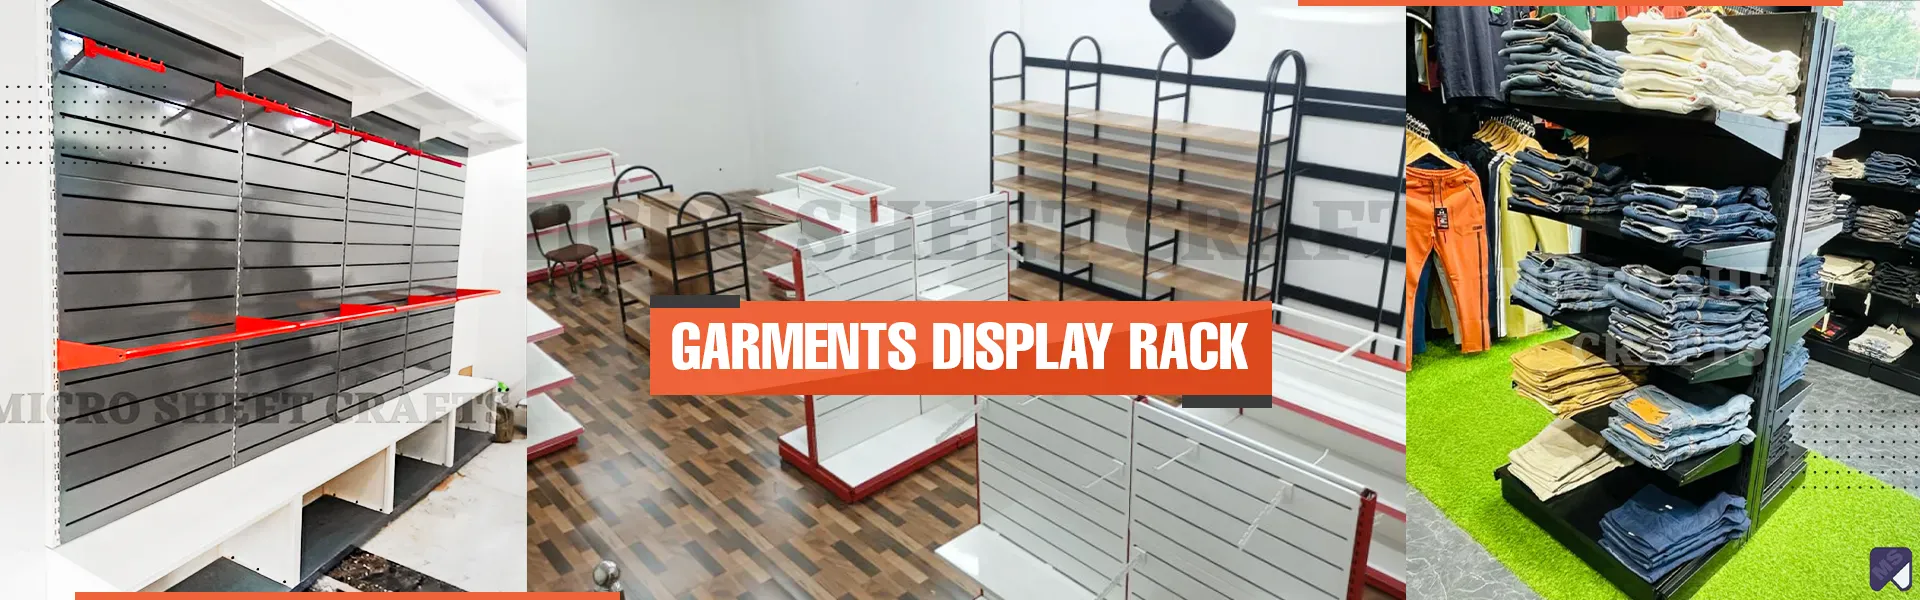 Garments Display Rack